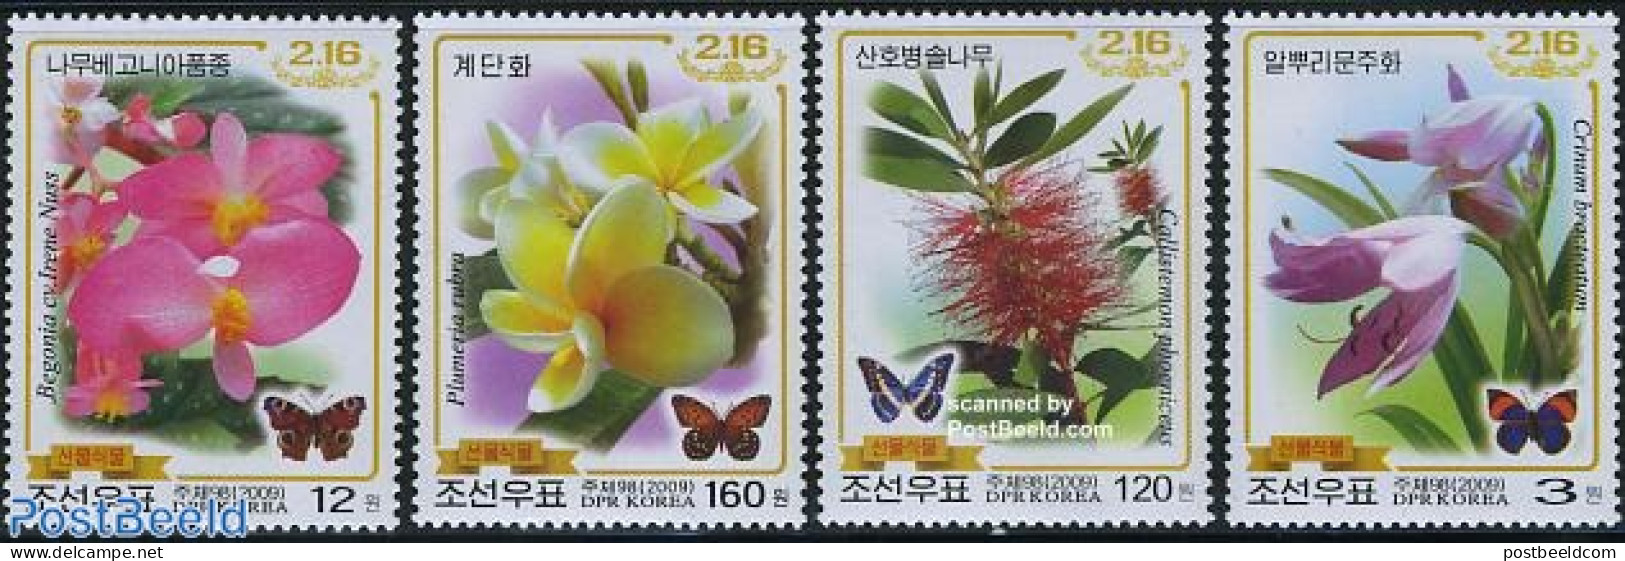 Korea, North 2009 Birthday Of Kim Jong Il 4v, Mint NH, Nature - Butterflies - Flowers & Plants - Korea (Nord-)